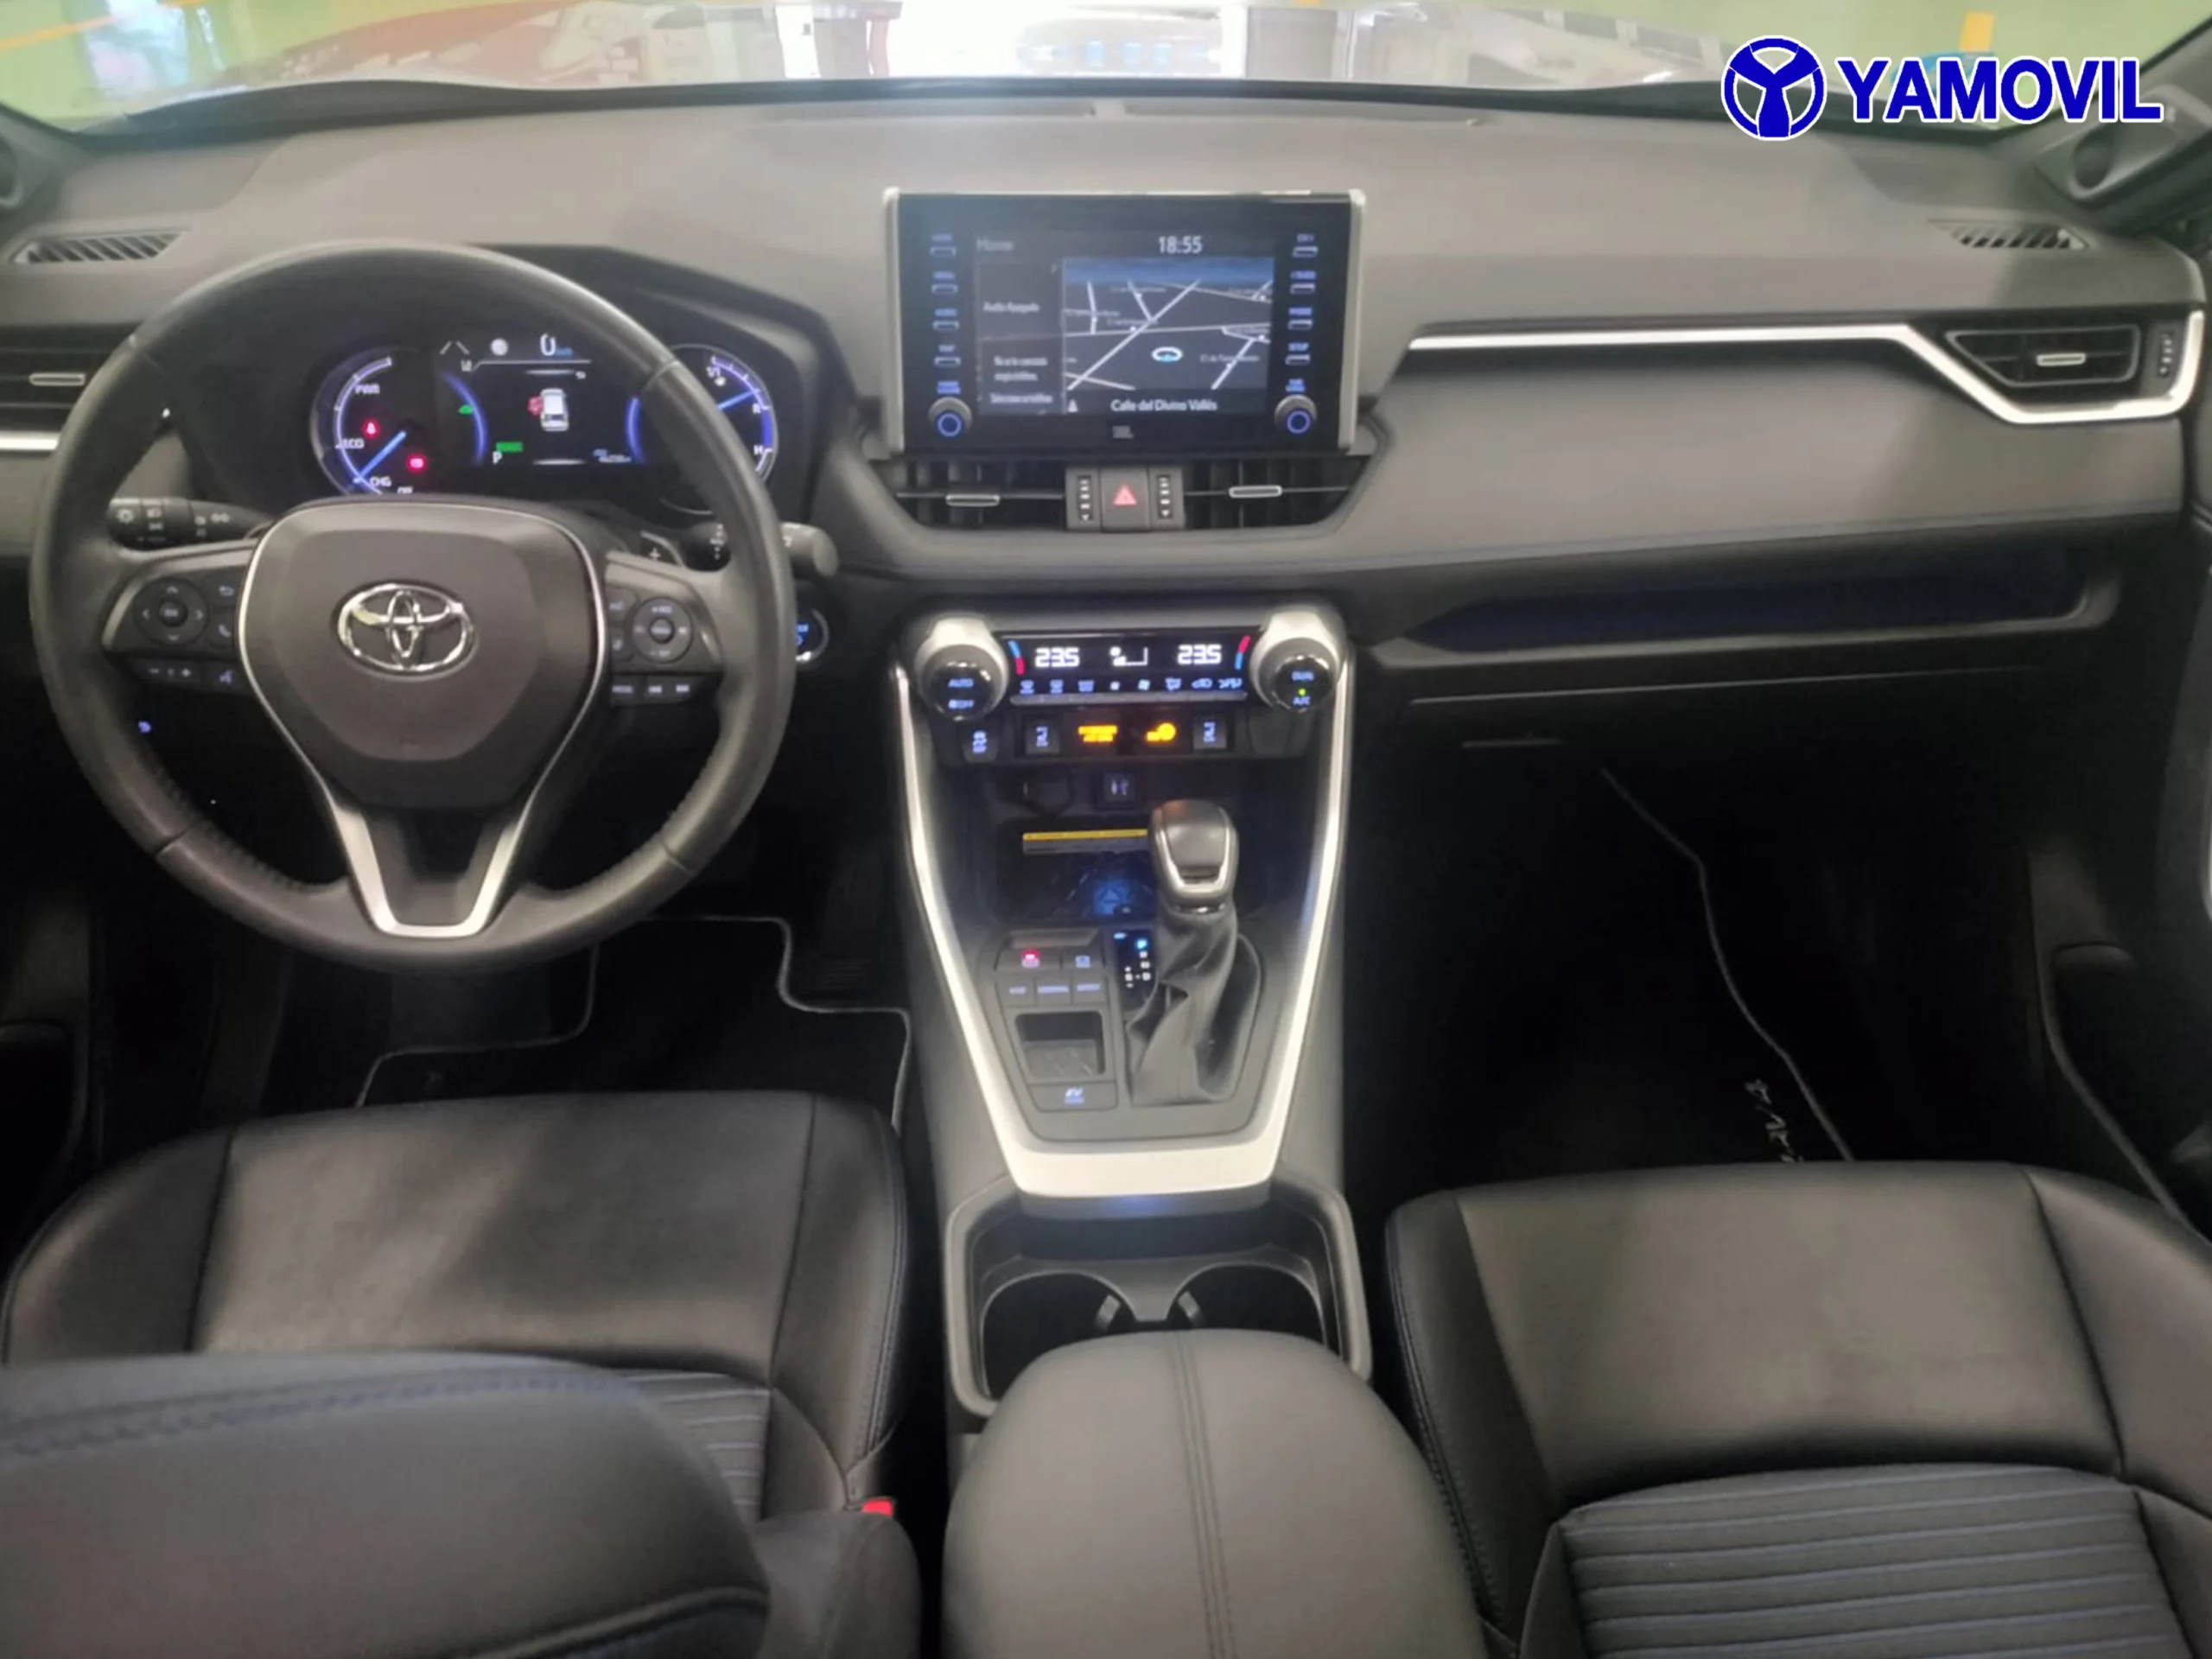 Toyota Rav4 2.5l hybrid Feel! 160 kW (218 CV) - Foto 3